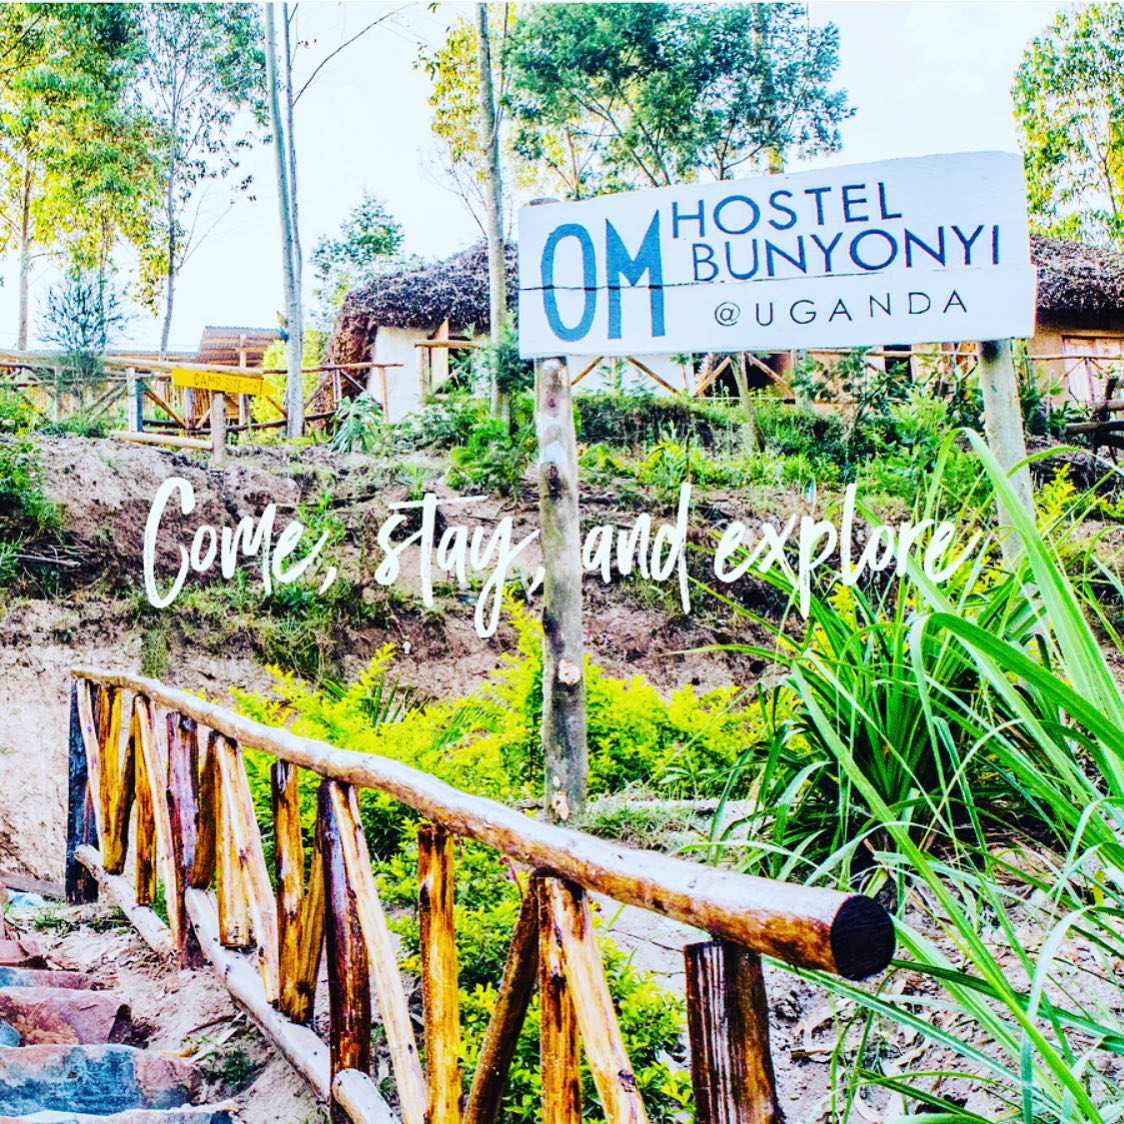 Relax and get confy at our beautiful nature garden🌿🌴🌷✨

---
Have an incredible days here OM HOSTEL BUNYONYI
Visit us
👉bunyonyiomhostel.com
👉enjojotours.com
__________________________________
#om_bunyonyi #uganda #africa #eastafrica  #lakebunyonyi #lakebuyonyi #lakebunyonyiuganda #lakebunyonyi_bestplacetostay #kabale #coupletravel #mountaingorillasofuganda #ウガンダ観光